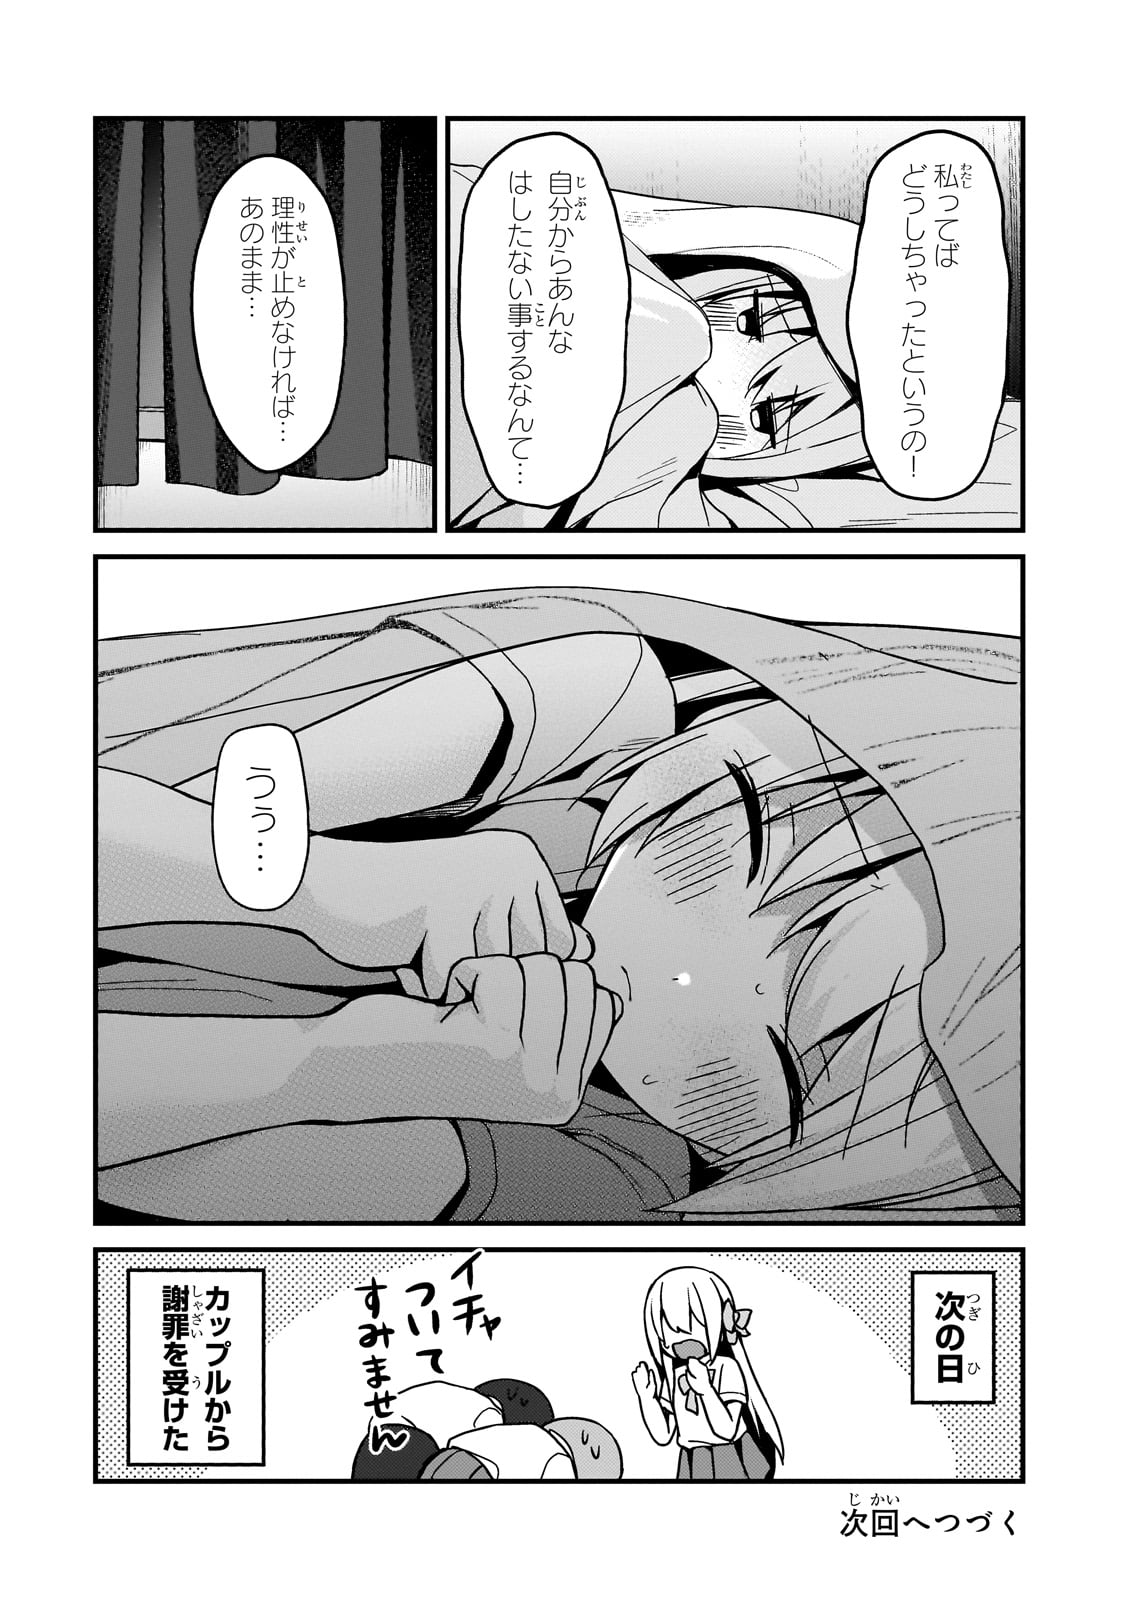 Netoge no Yome ga Ninki Idol datta - Chapter 16 - Page 16